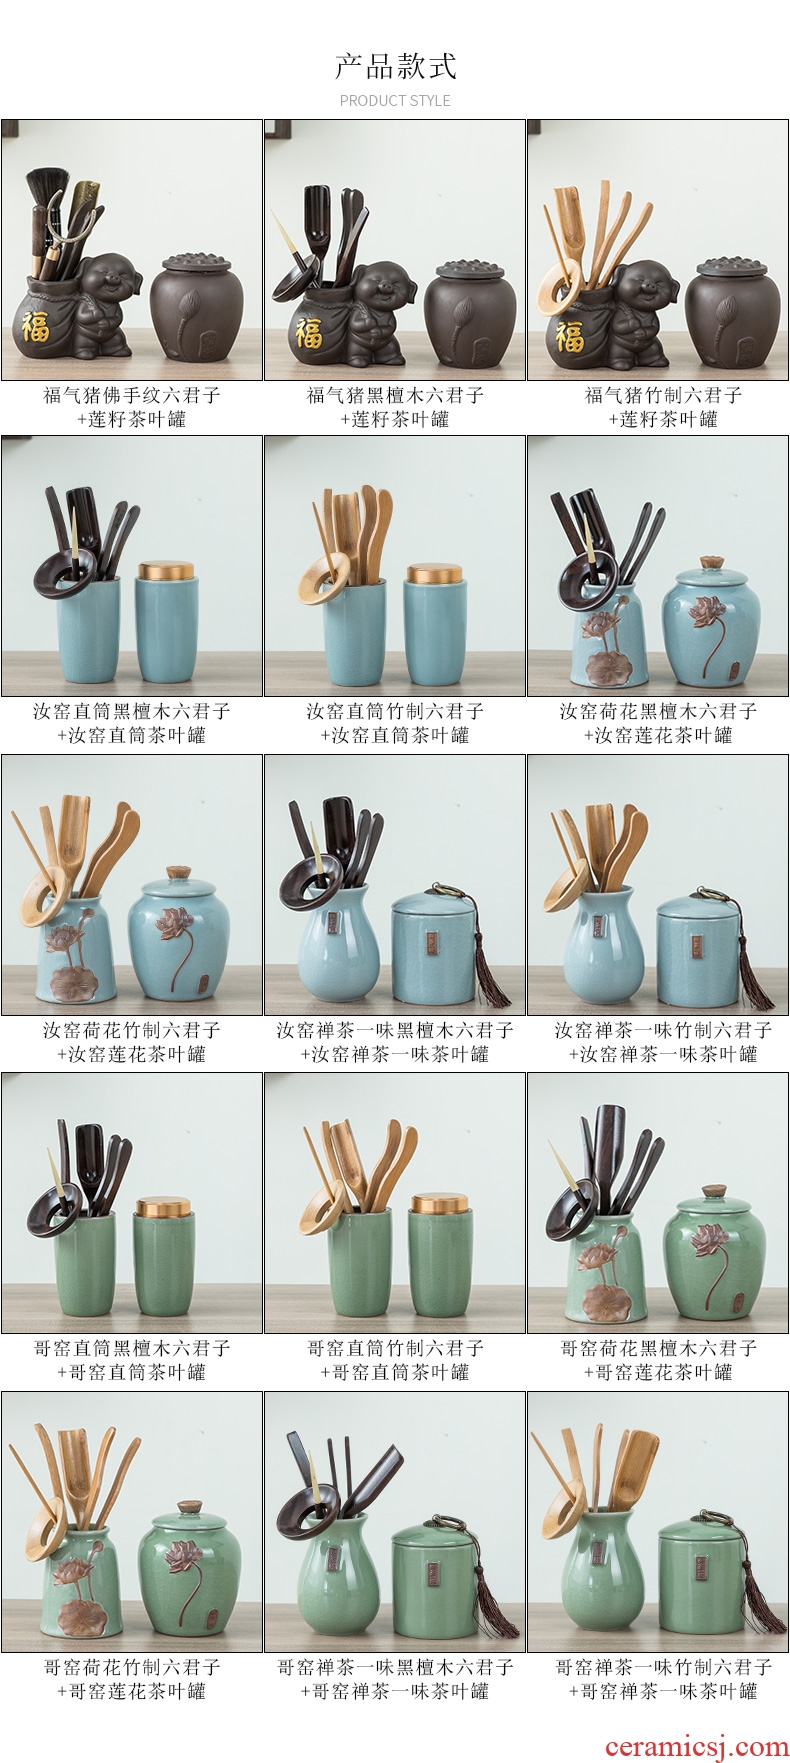 Hong bo gourmet tea six gentleman's suit household ceramic tea pot of tea accessories teaspoons ChaGa bamboo ChaZhen